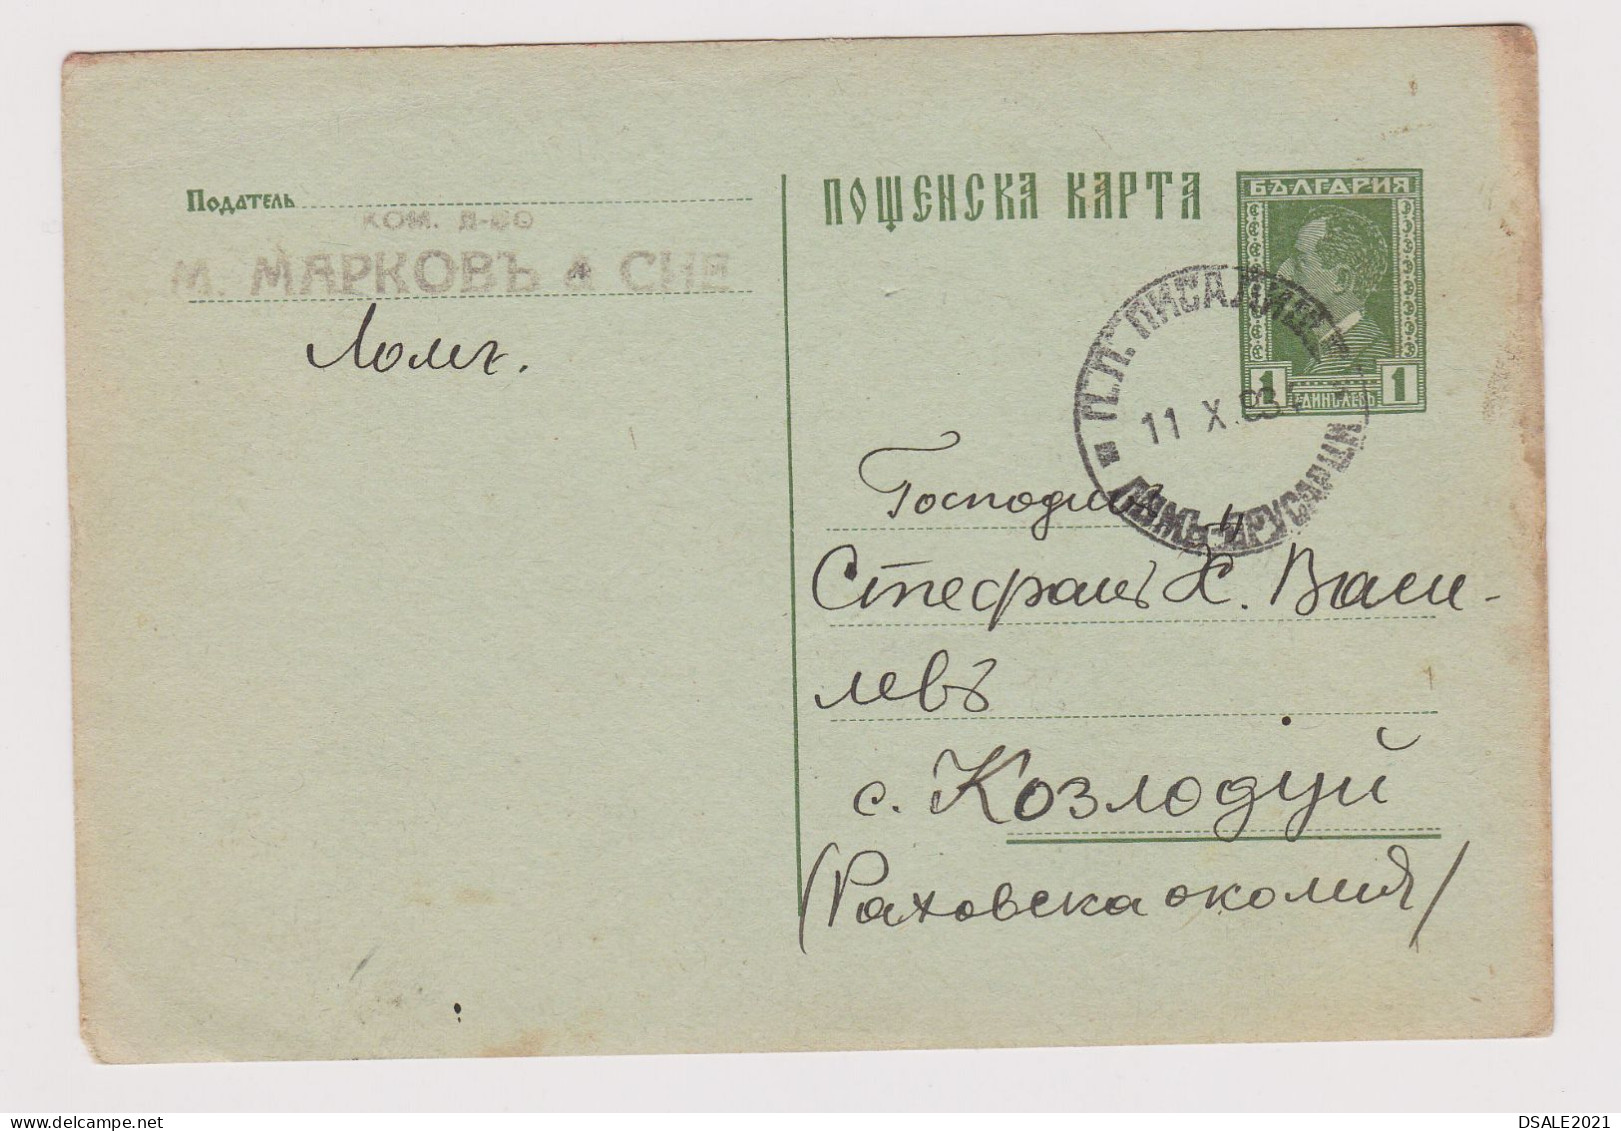 Bulgaria Bulgarie Bulgarian Postal Stationery Card, 1934 Sent Via Railway TPO Zug Bahnpost (LOM-BRUSARTZI) (575) - Cartoline Postali